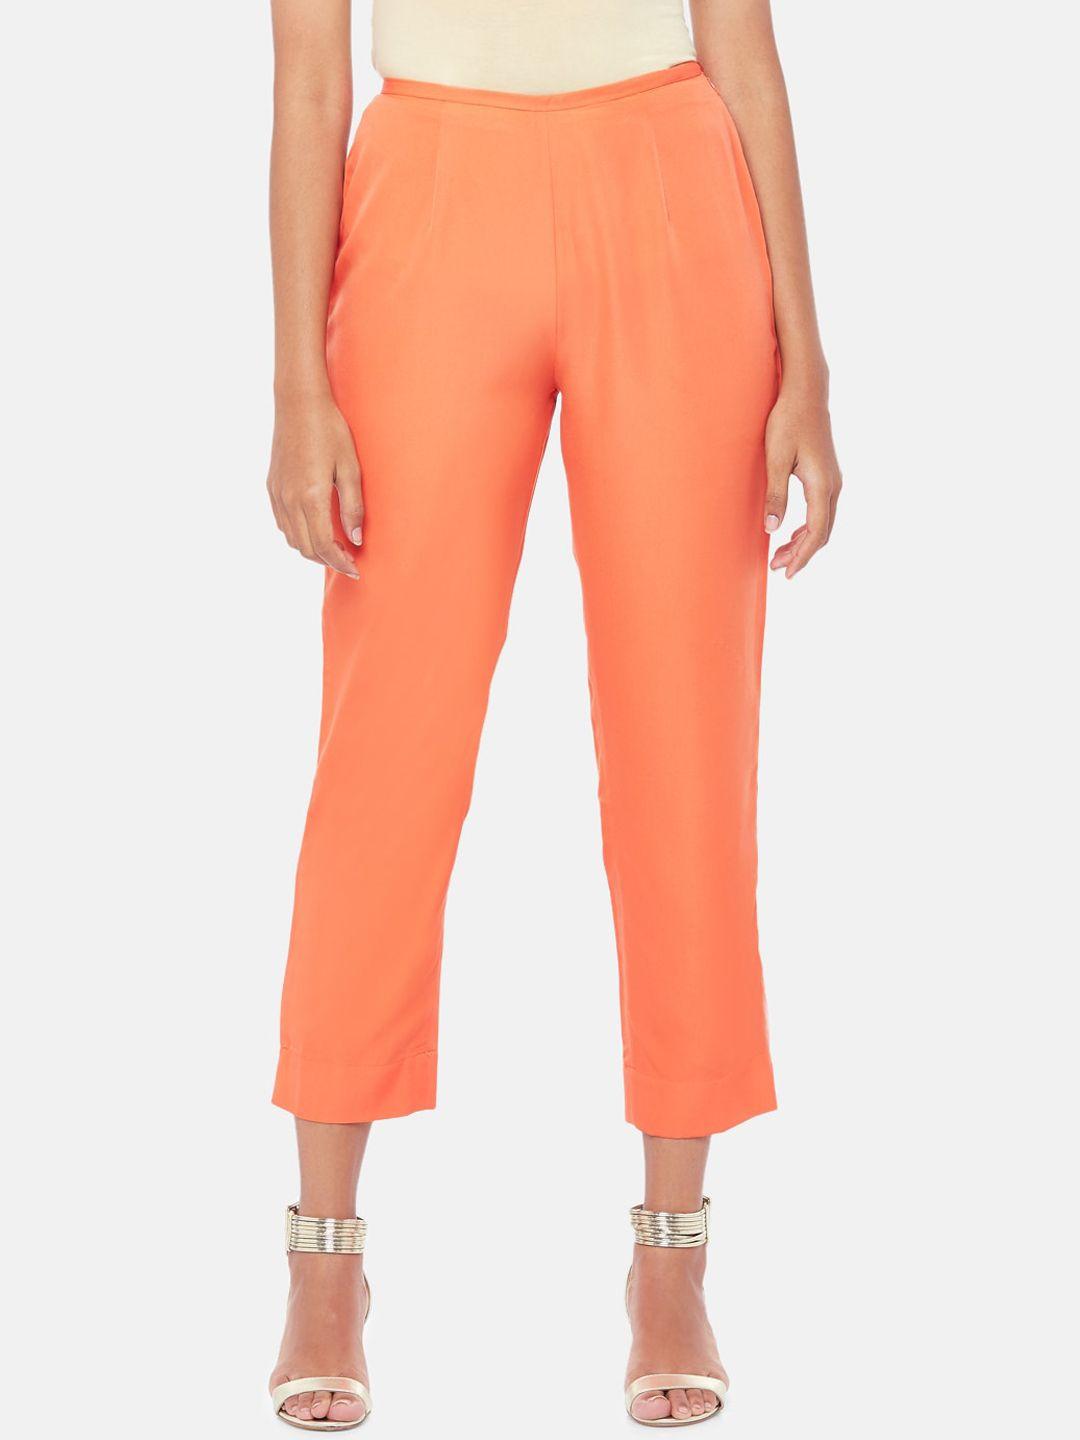 rangmanch by pantaloons women orange regular fit solid regular trousers